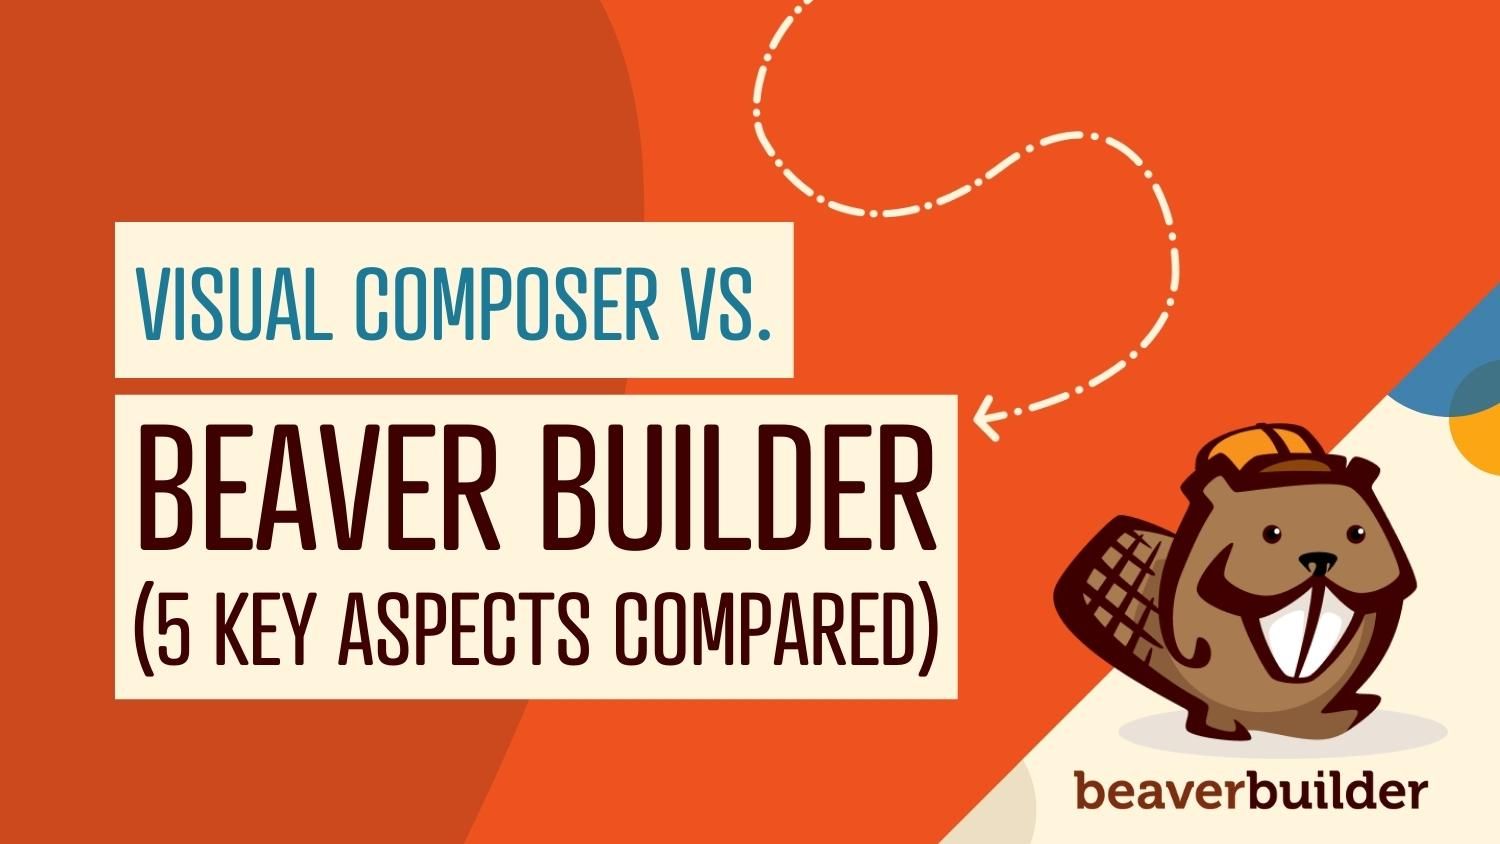 Visual Composer vs Beaver Builder 5 key aspects compared | Beaver Builder blog